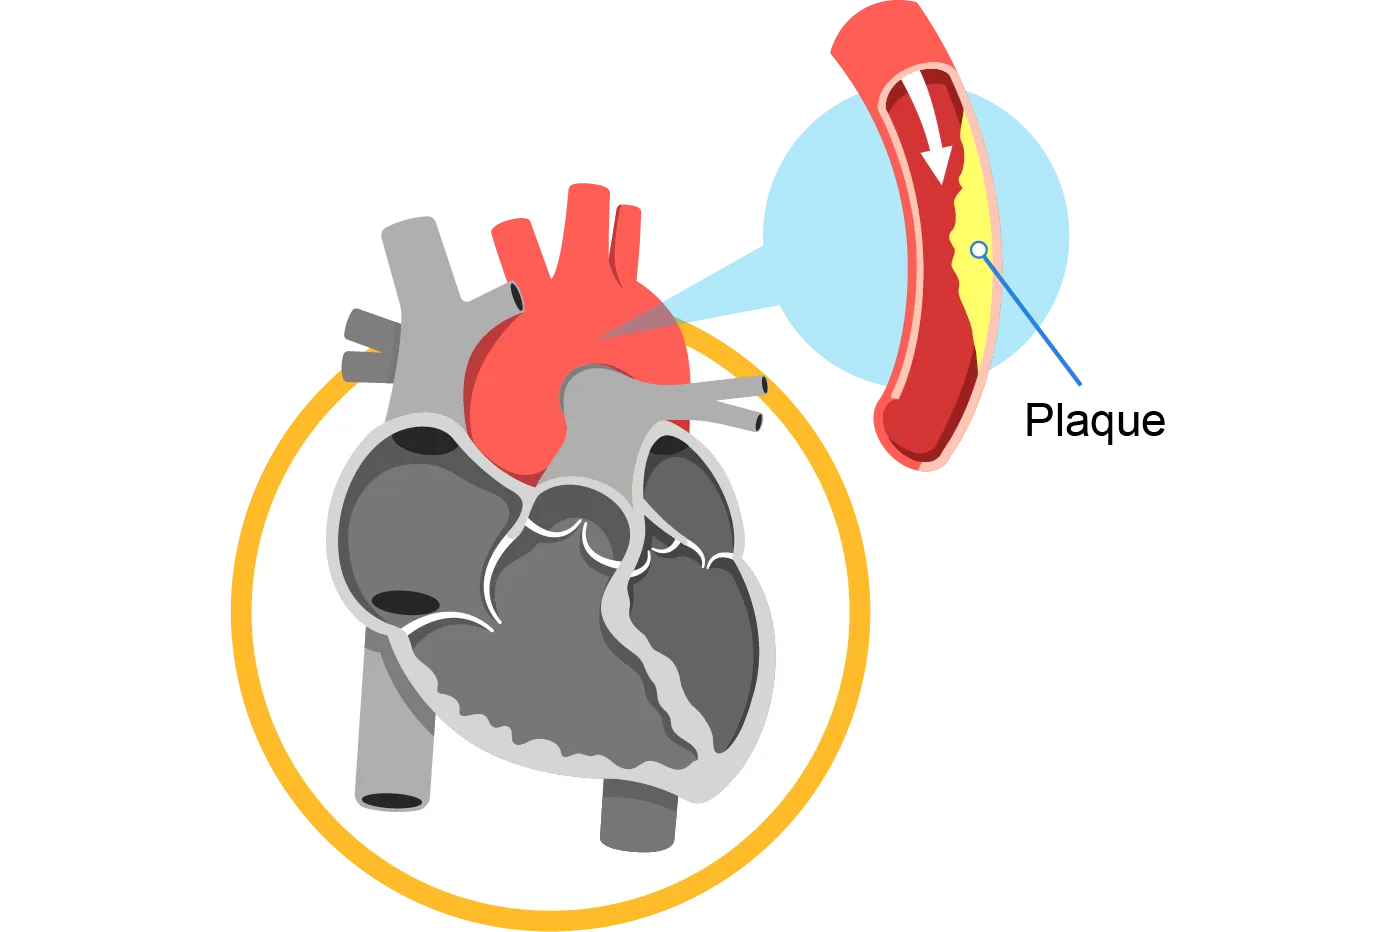 plaque build-up in coronary arteries